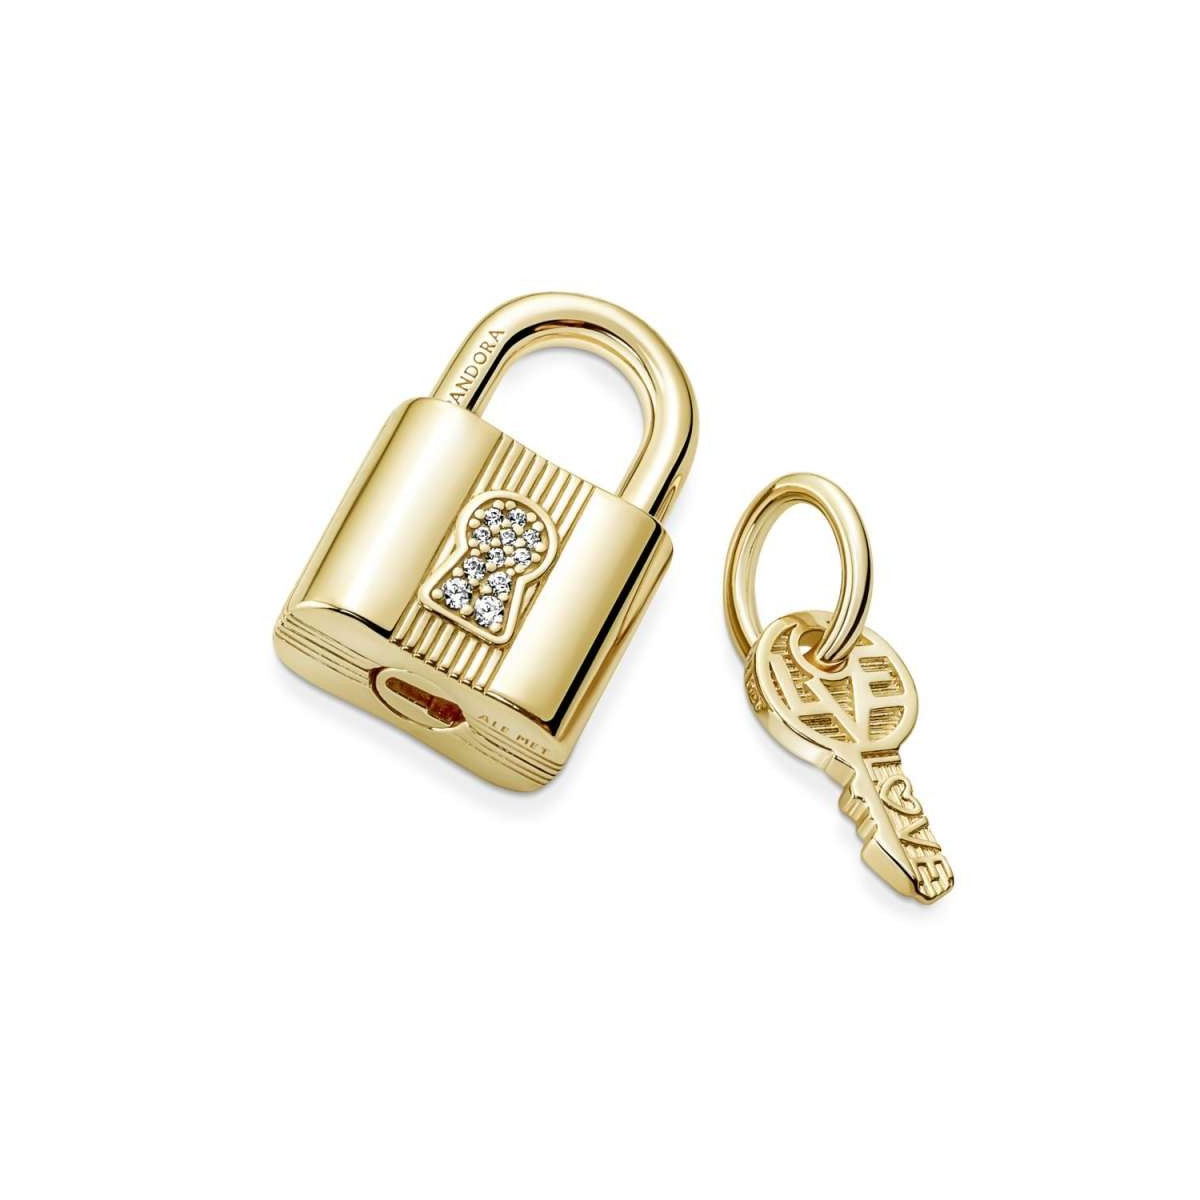 Abalorio Pandora Candado y llave plata 925 dorada